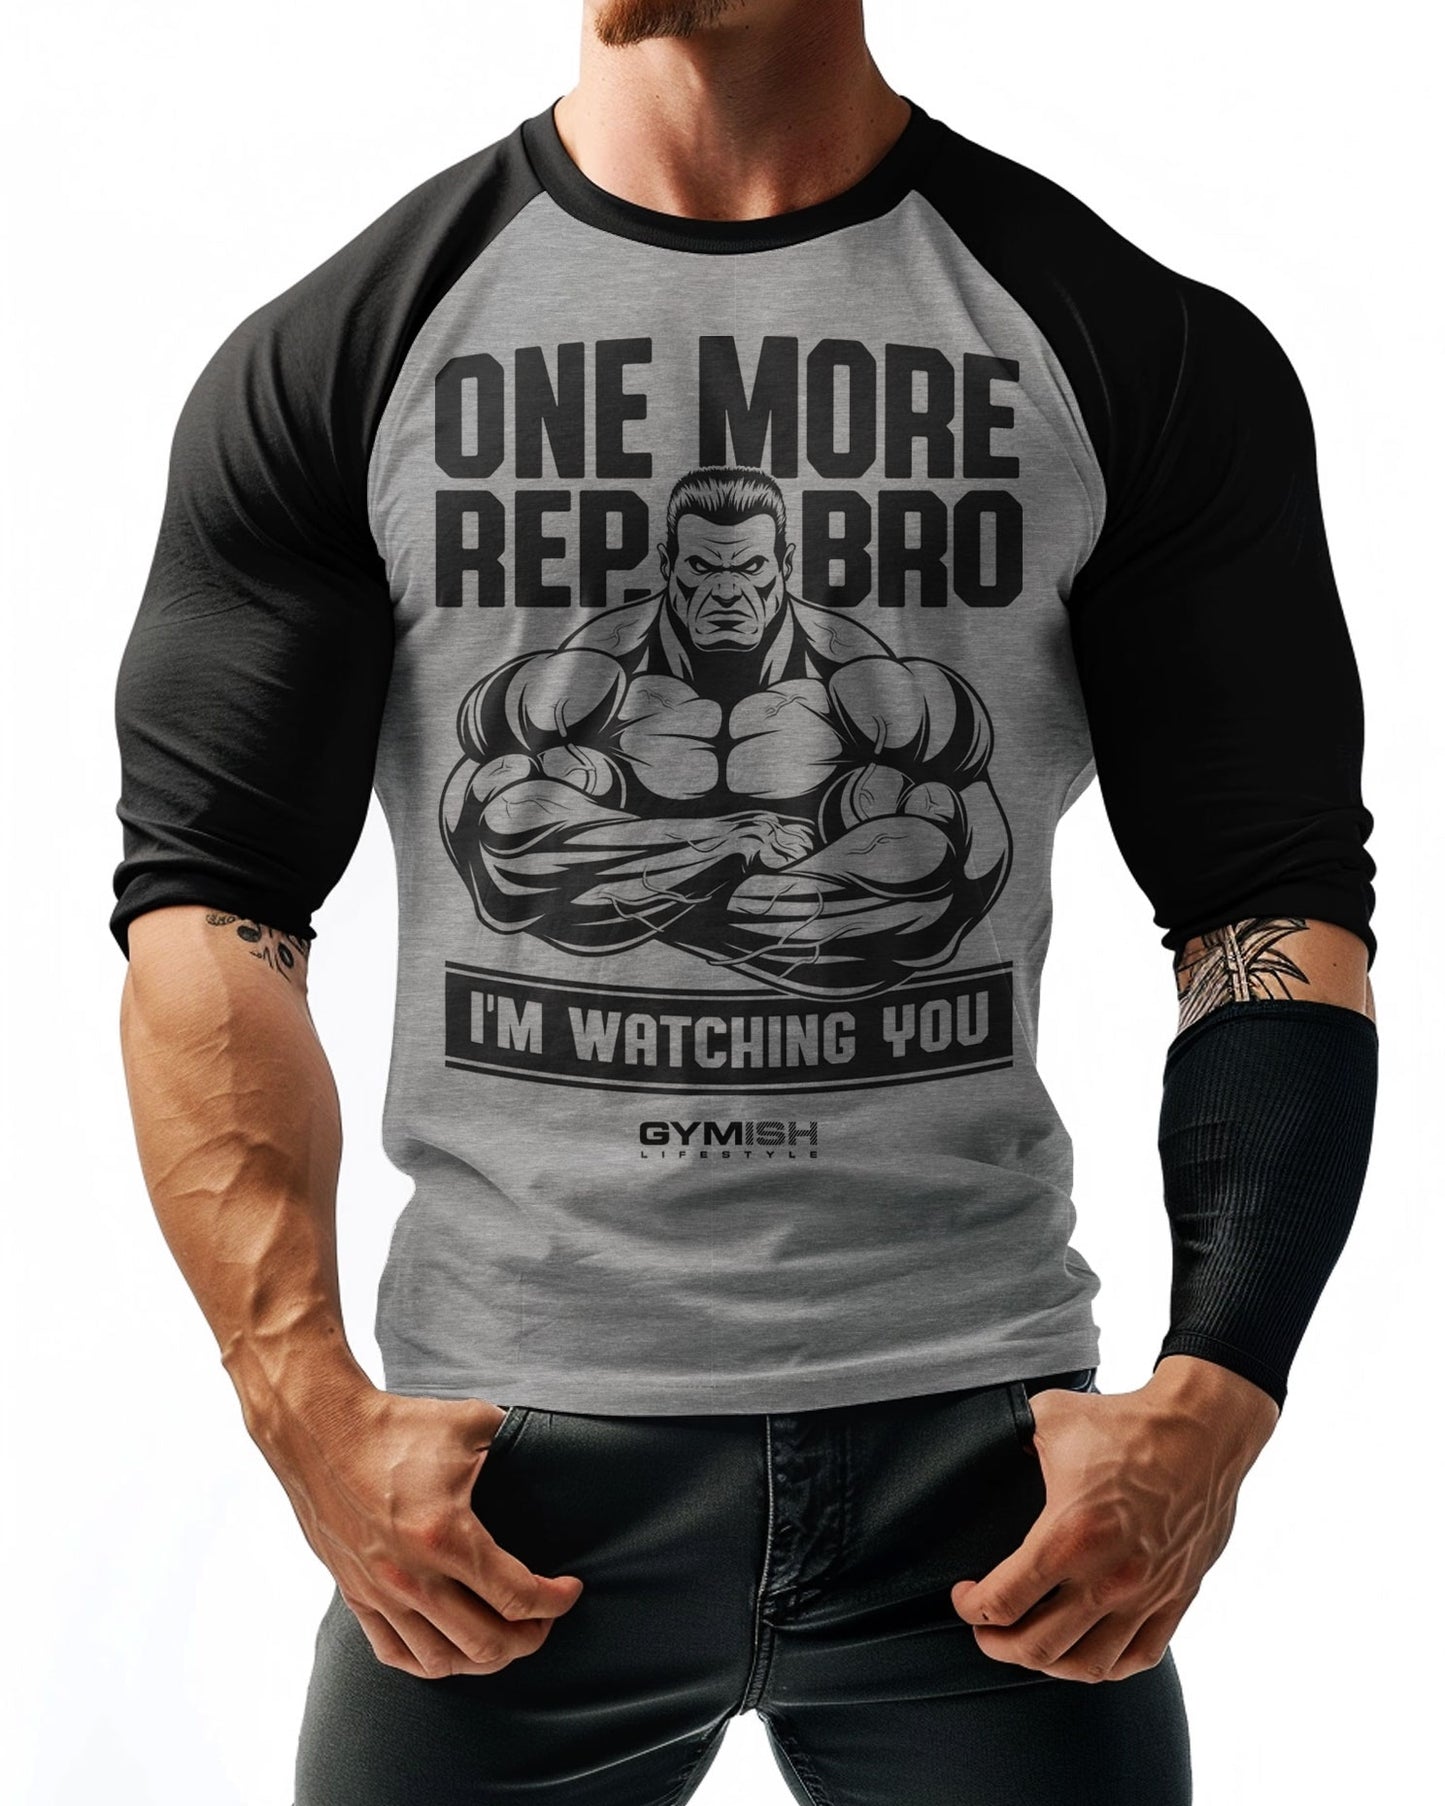 33- RAGLAN One More Rep Bro! Workout Gym T-Shirt for Men